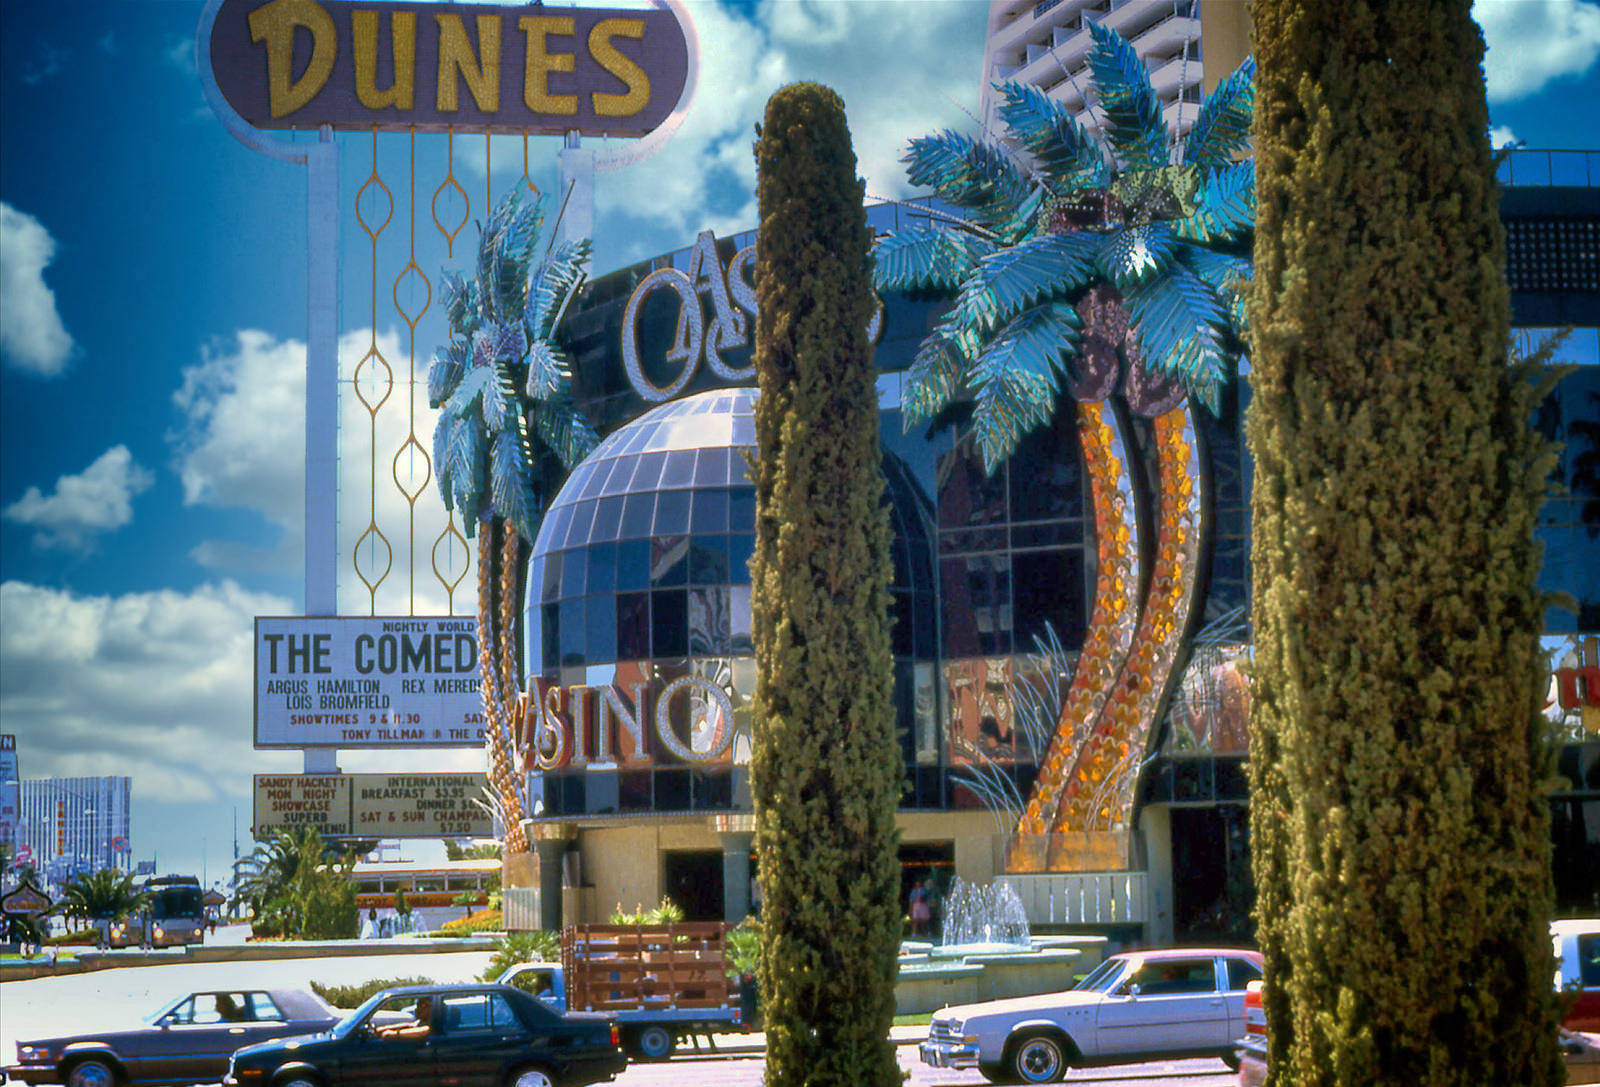 Dunes & Oasis Casino, August 1990